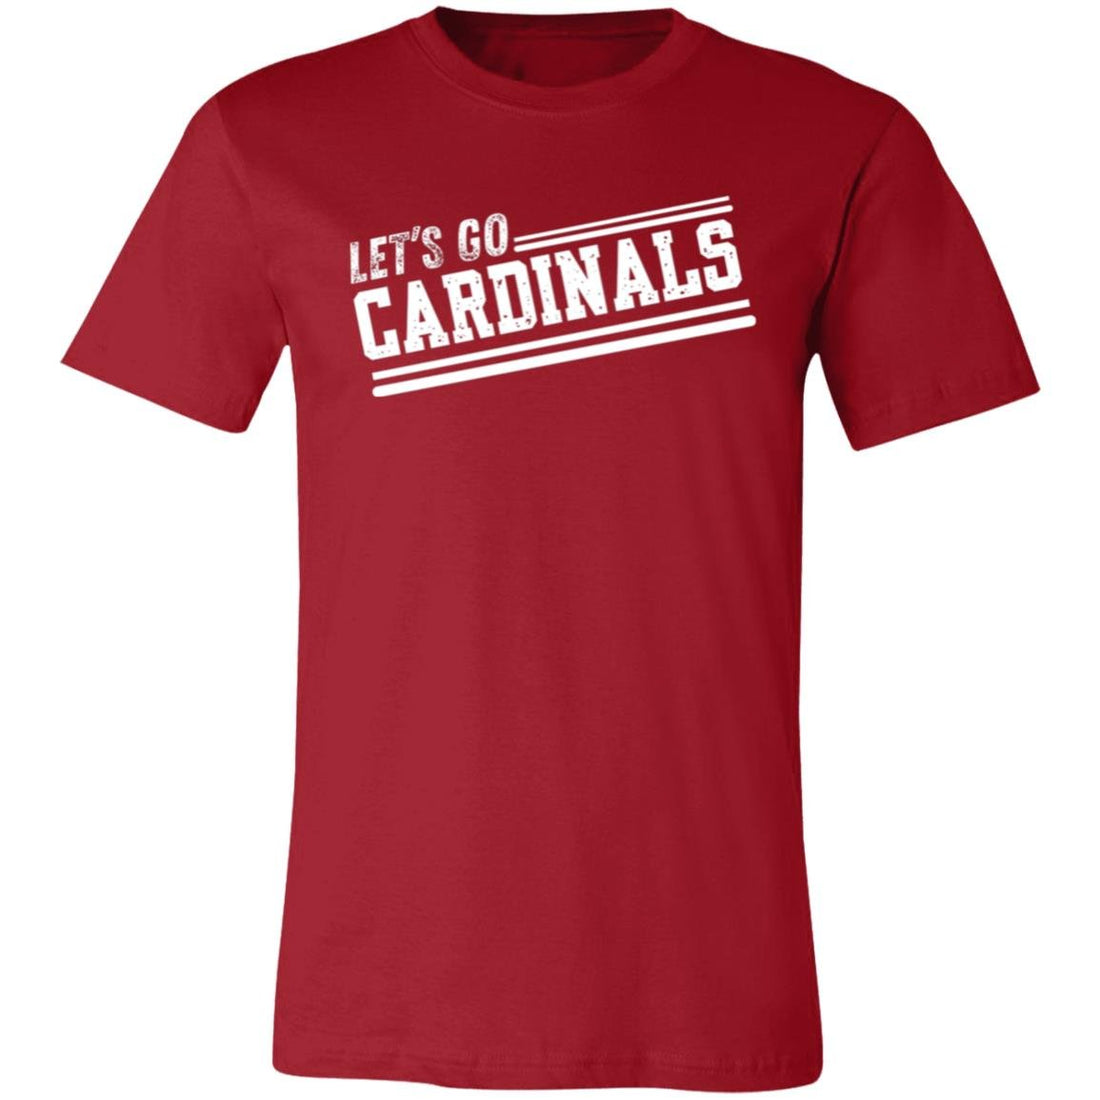 Let's Go Cardinals T - Shirt - T - Shirts - Positively Sassy - Let's Go Cardinals T - Shirt